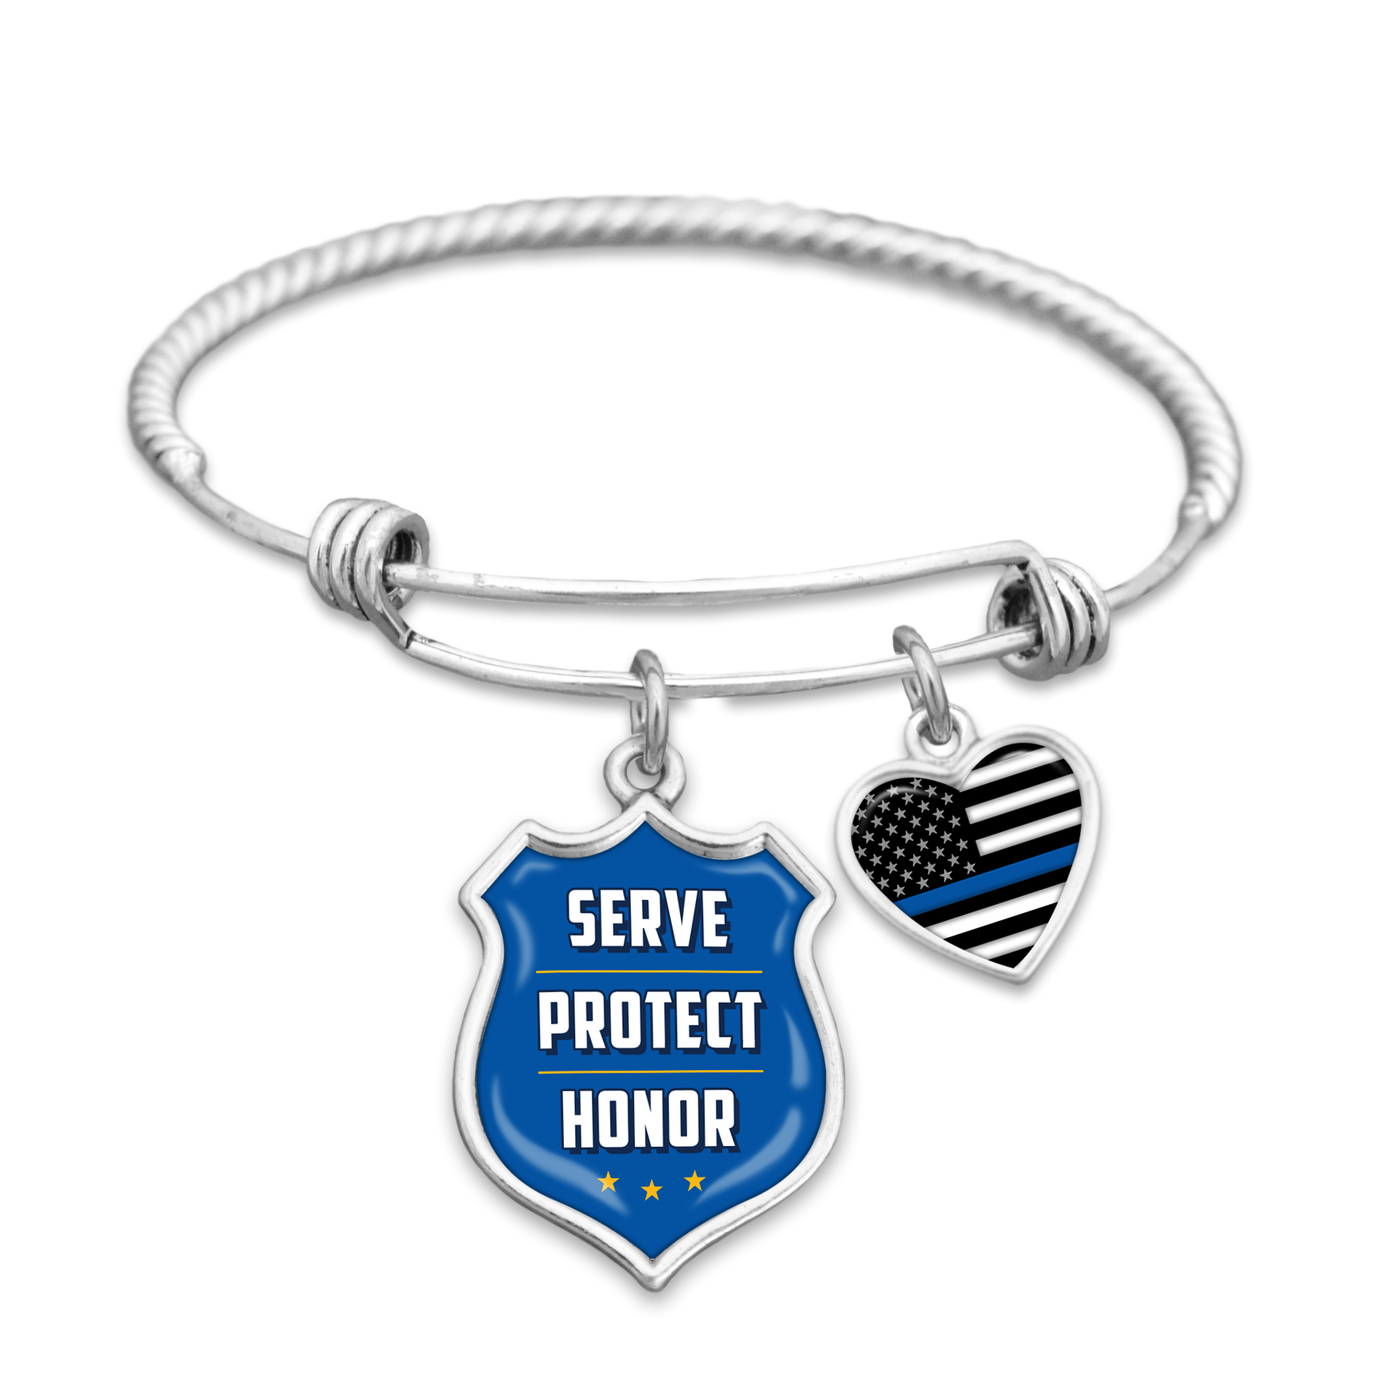 Serve Protect Honor Police Charm Bracelet